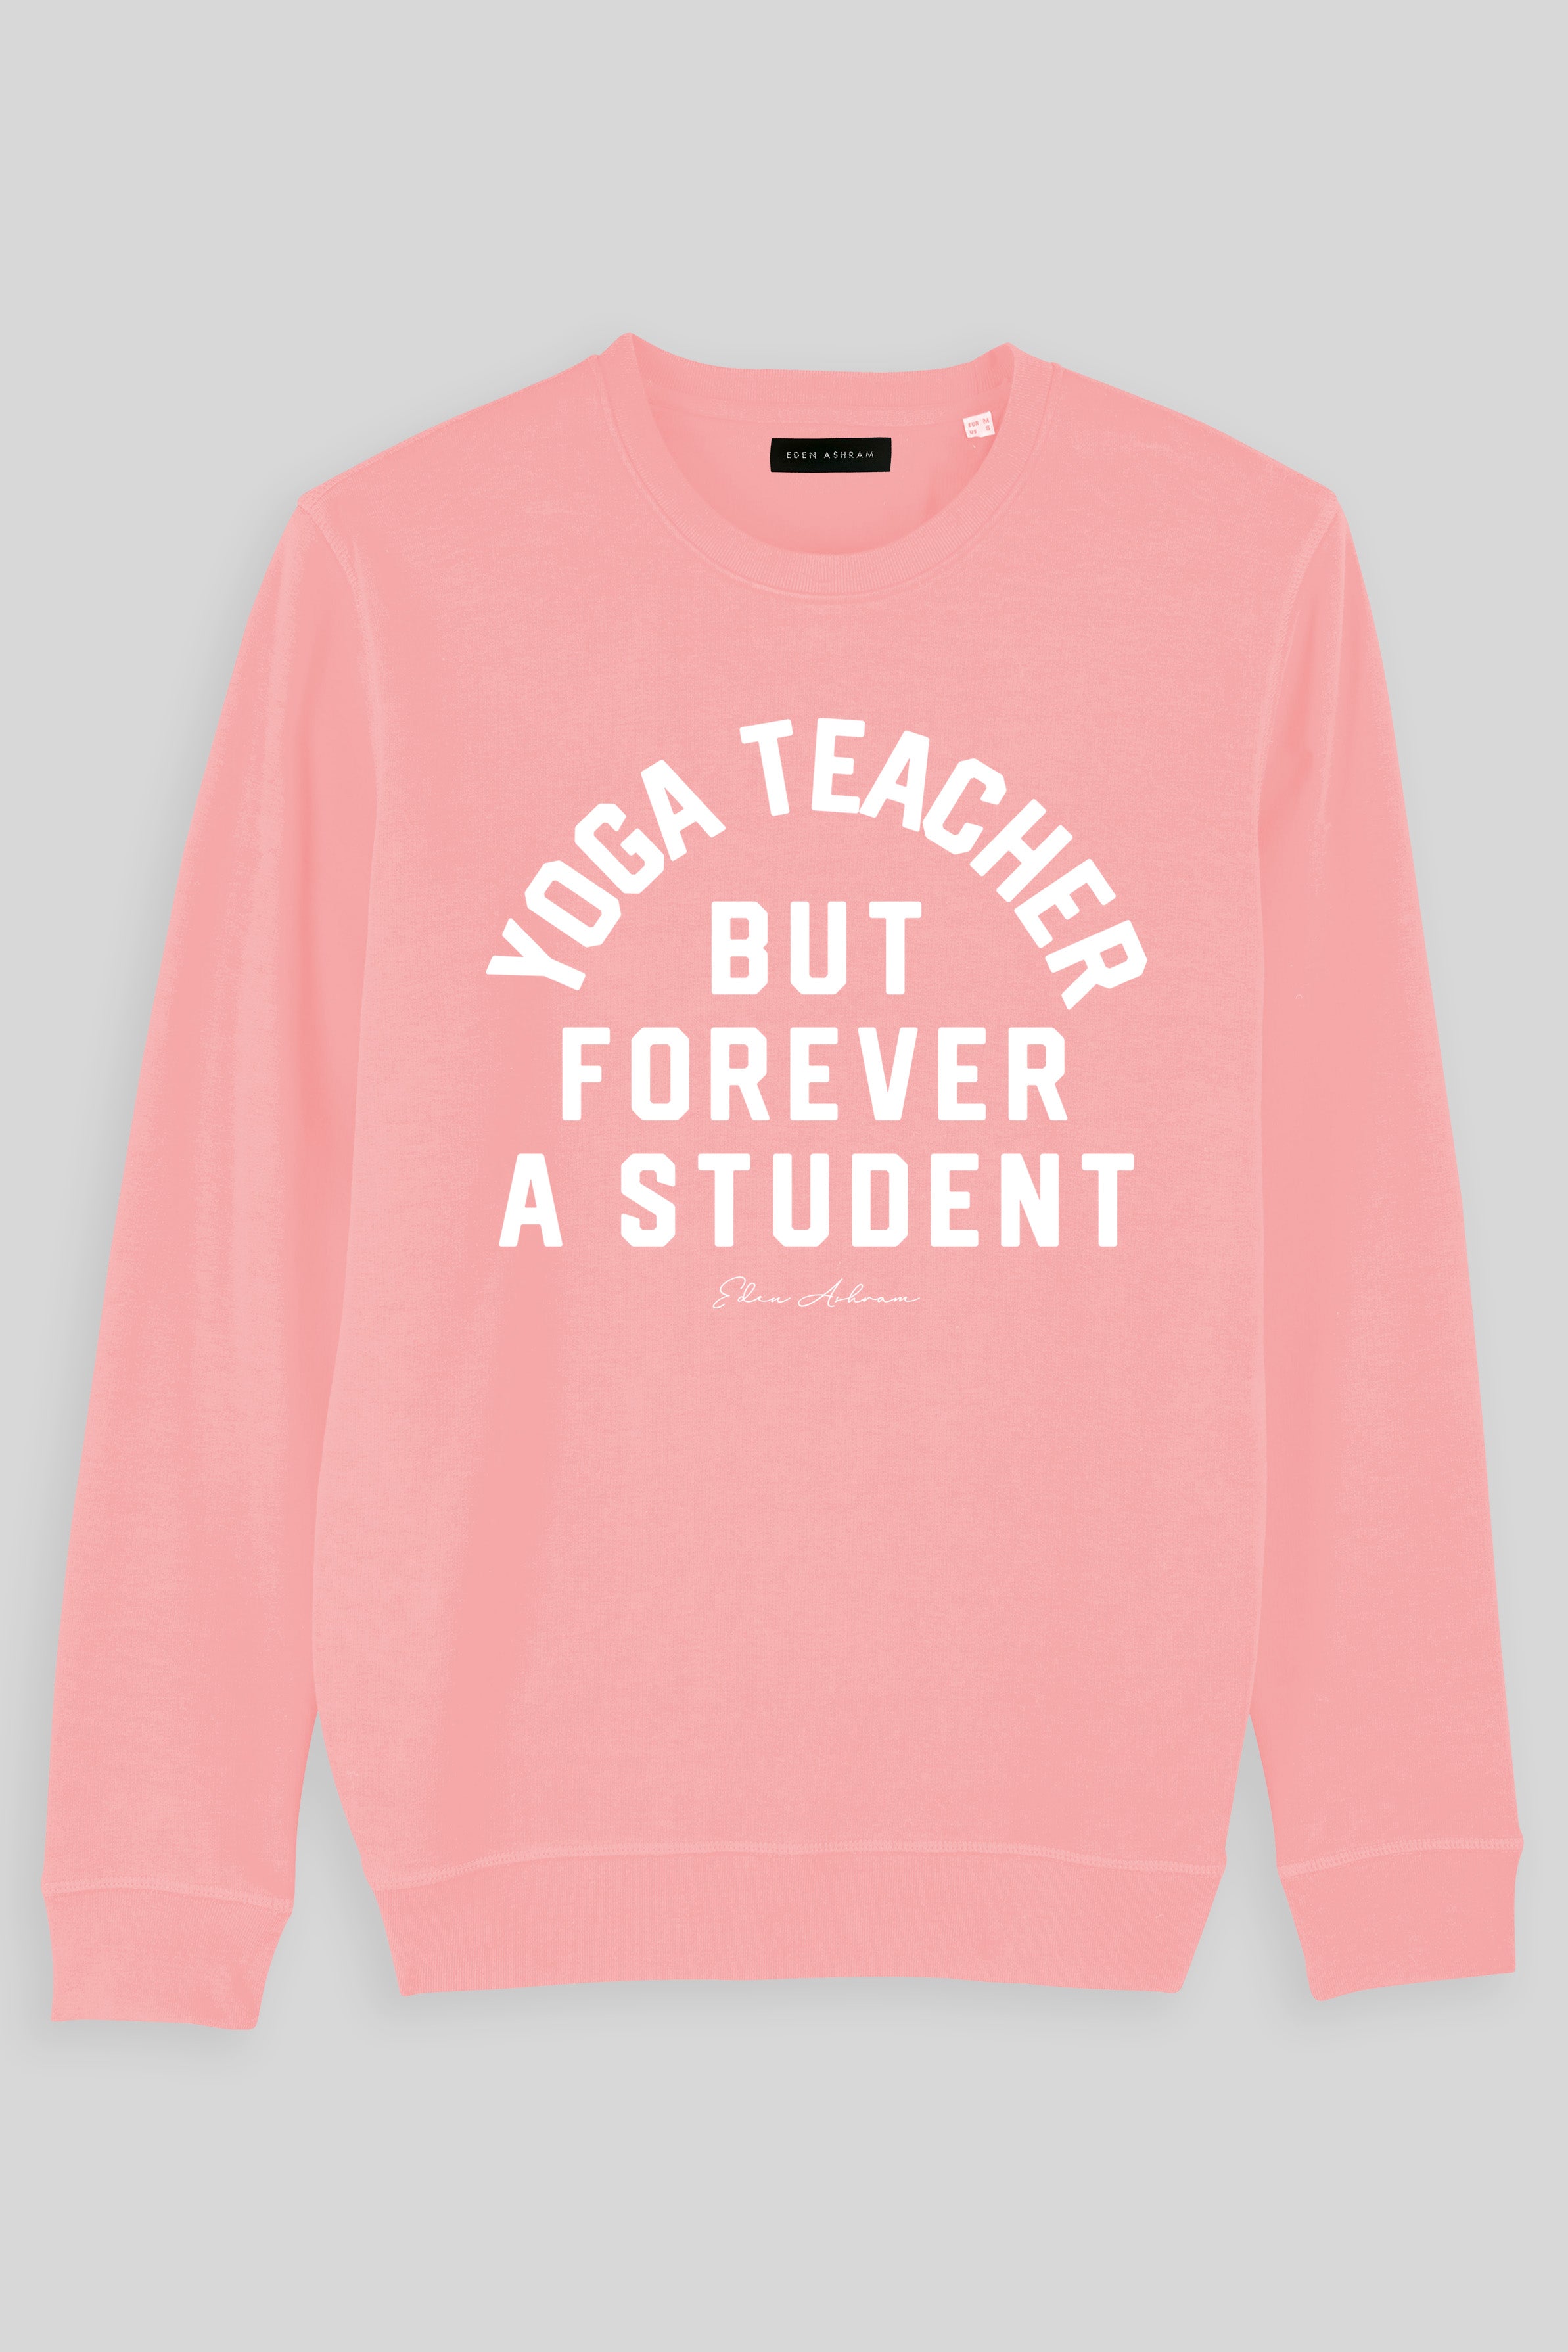 Eden Ashram Yoga Teacher But Forever A Student Premium Crew Neck Sweatshirt Coral Pink